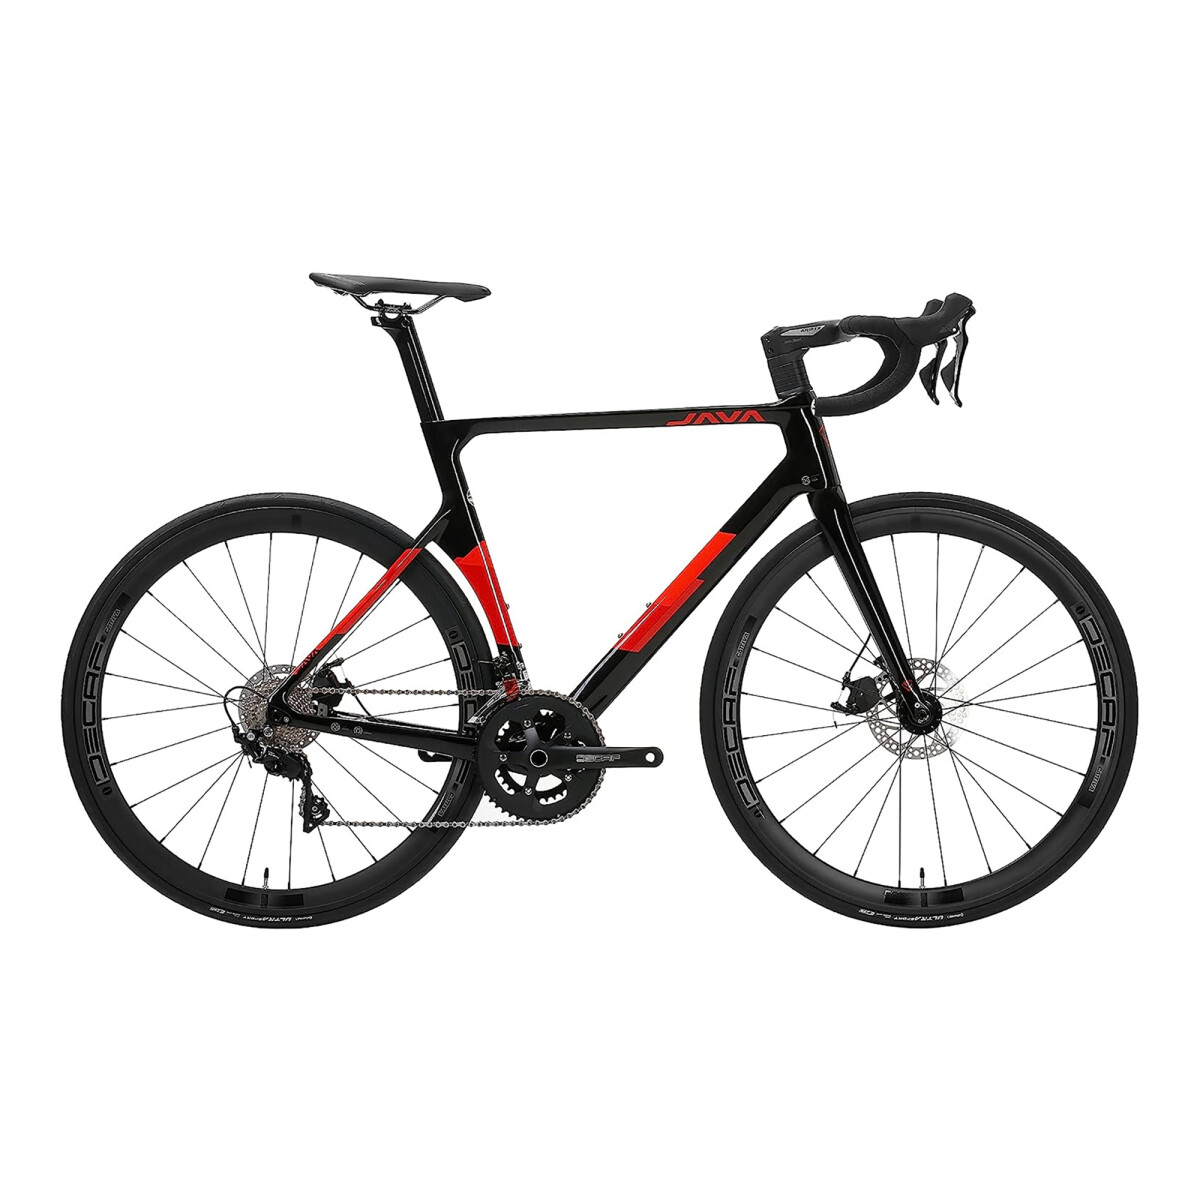 Java - Bicicleta de Ruta Vesuvio - 700C. 20 Velocidades, Talle 57. Color Negro / Rojo. - 001 